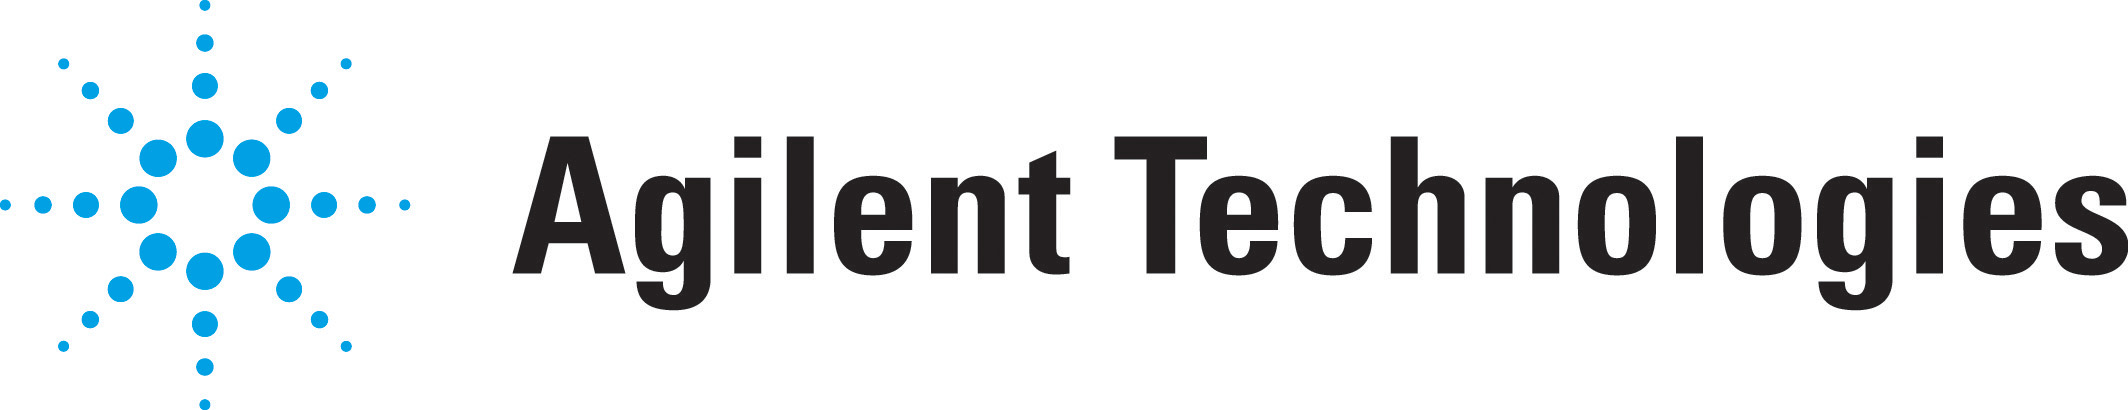 Agilent_logo